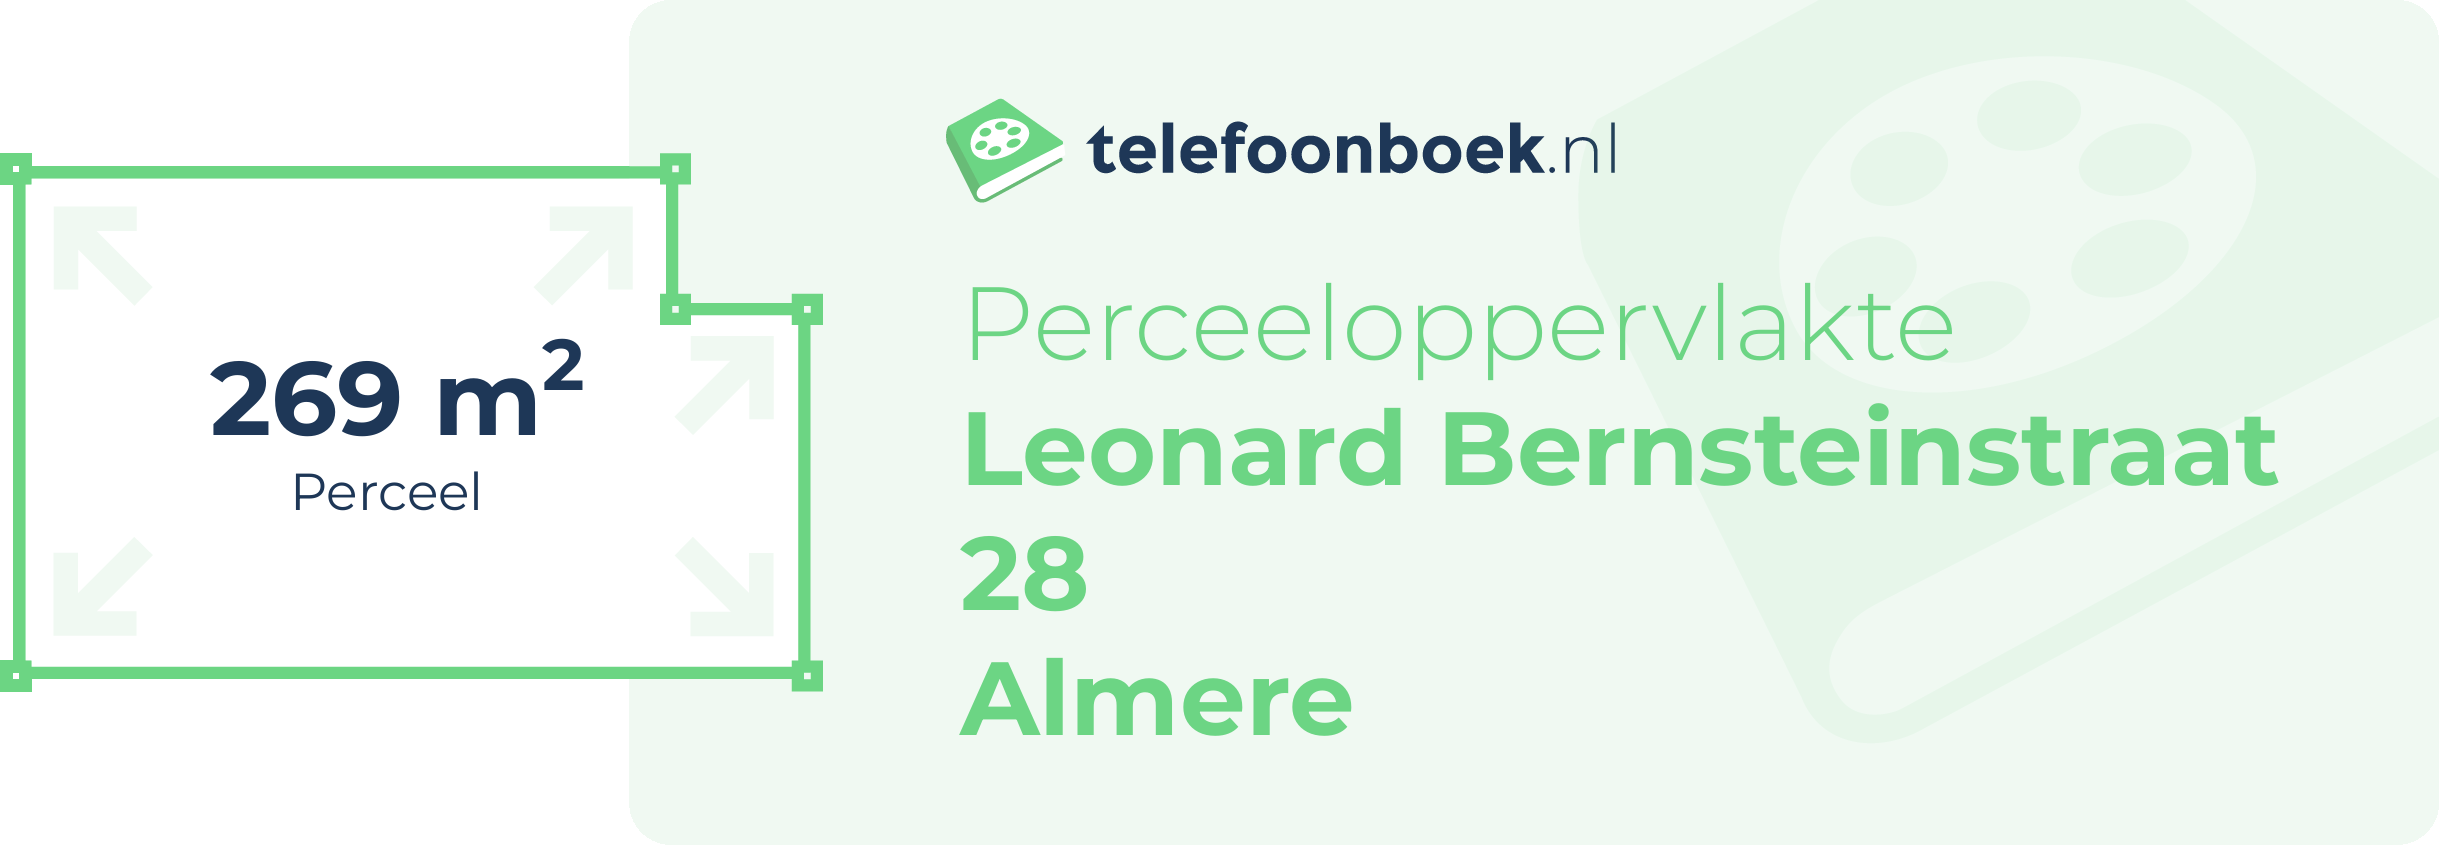 Perceeloppervlakte Leonard Bernsteinstraat 28 Almere